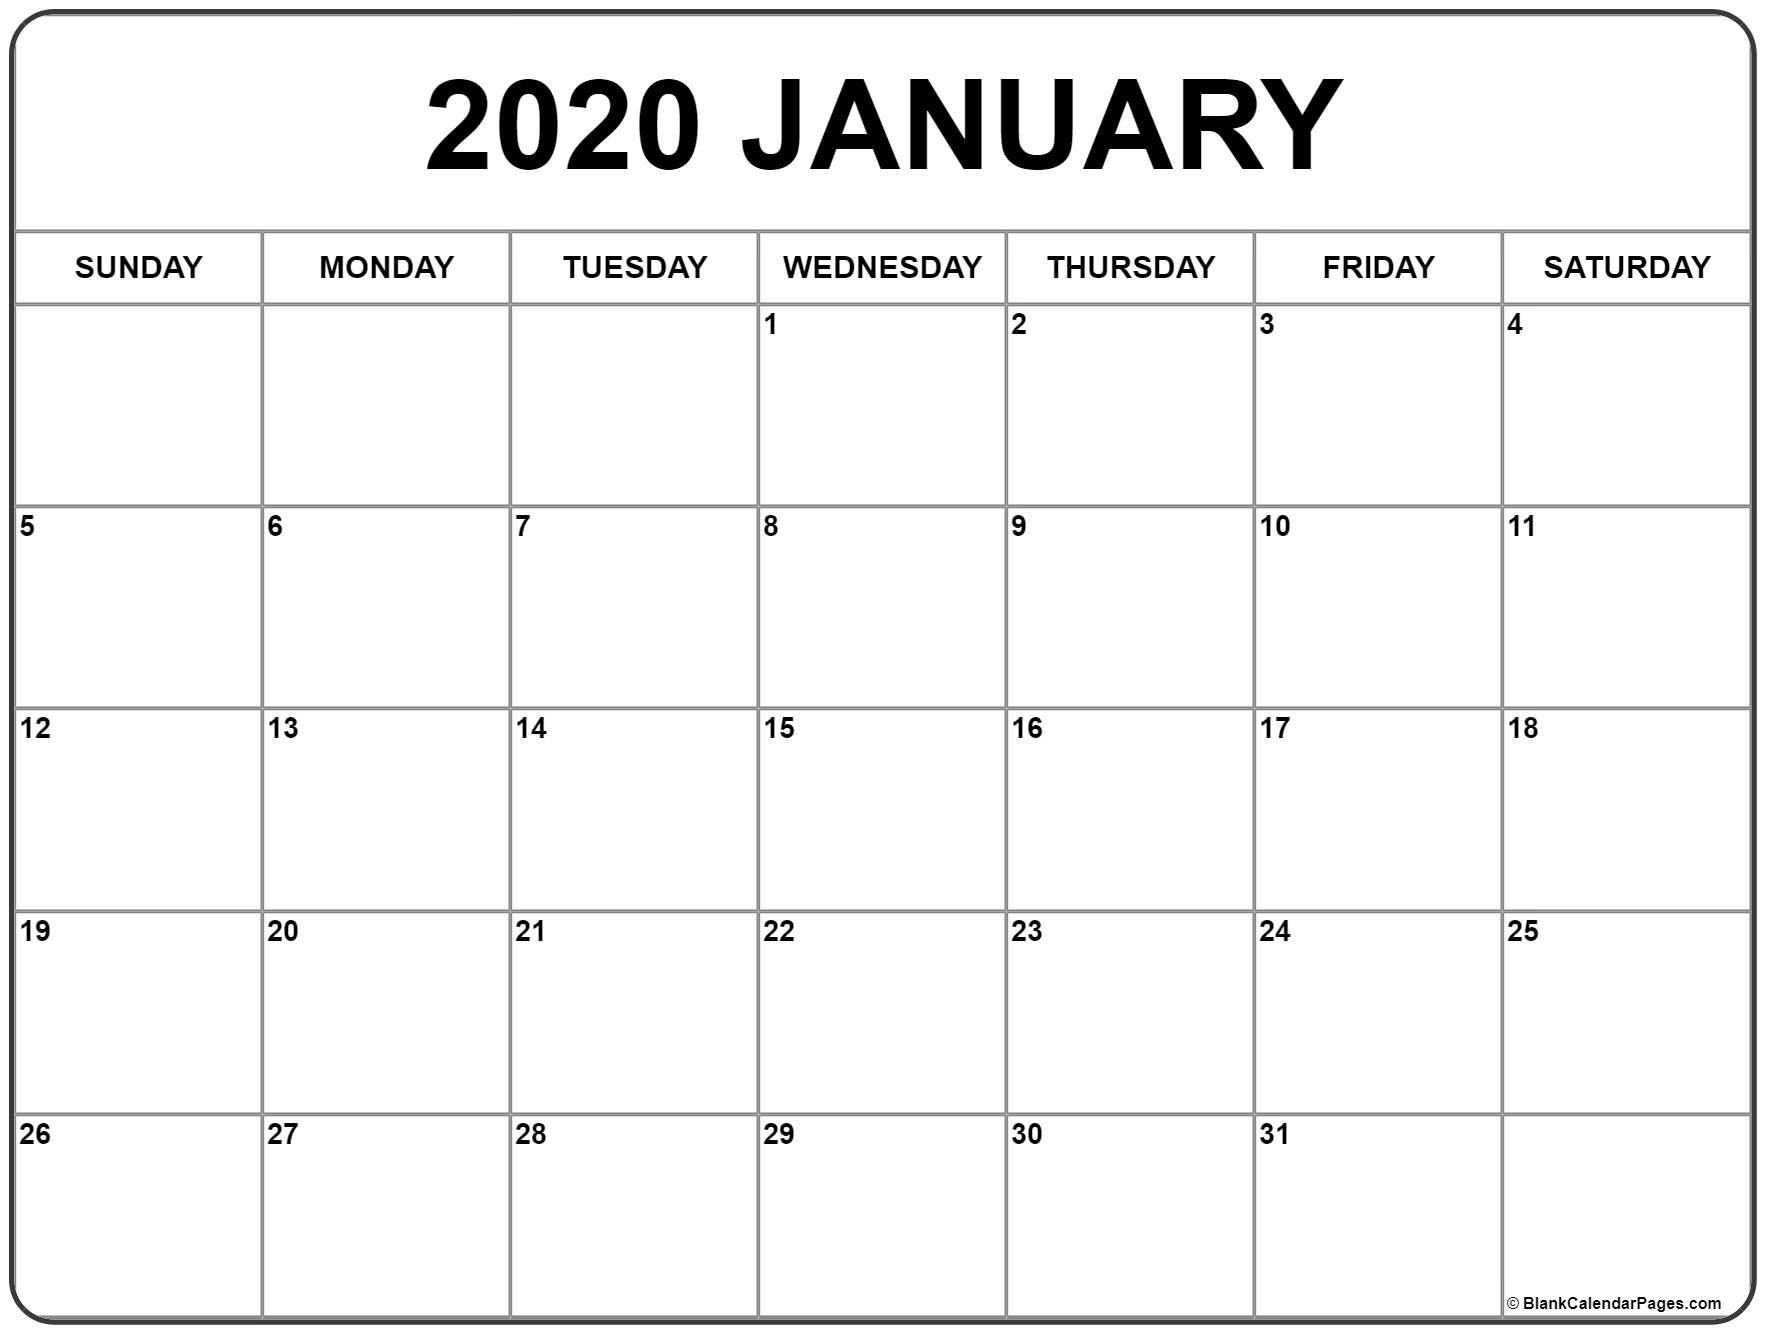 January 2020 Calendar | Free Printable Monthly Calendars-Calendar For January 2020